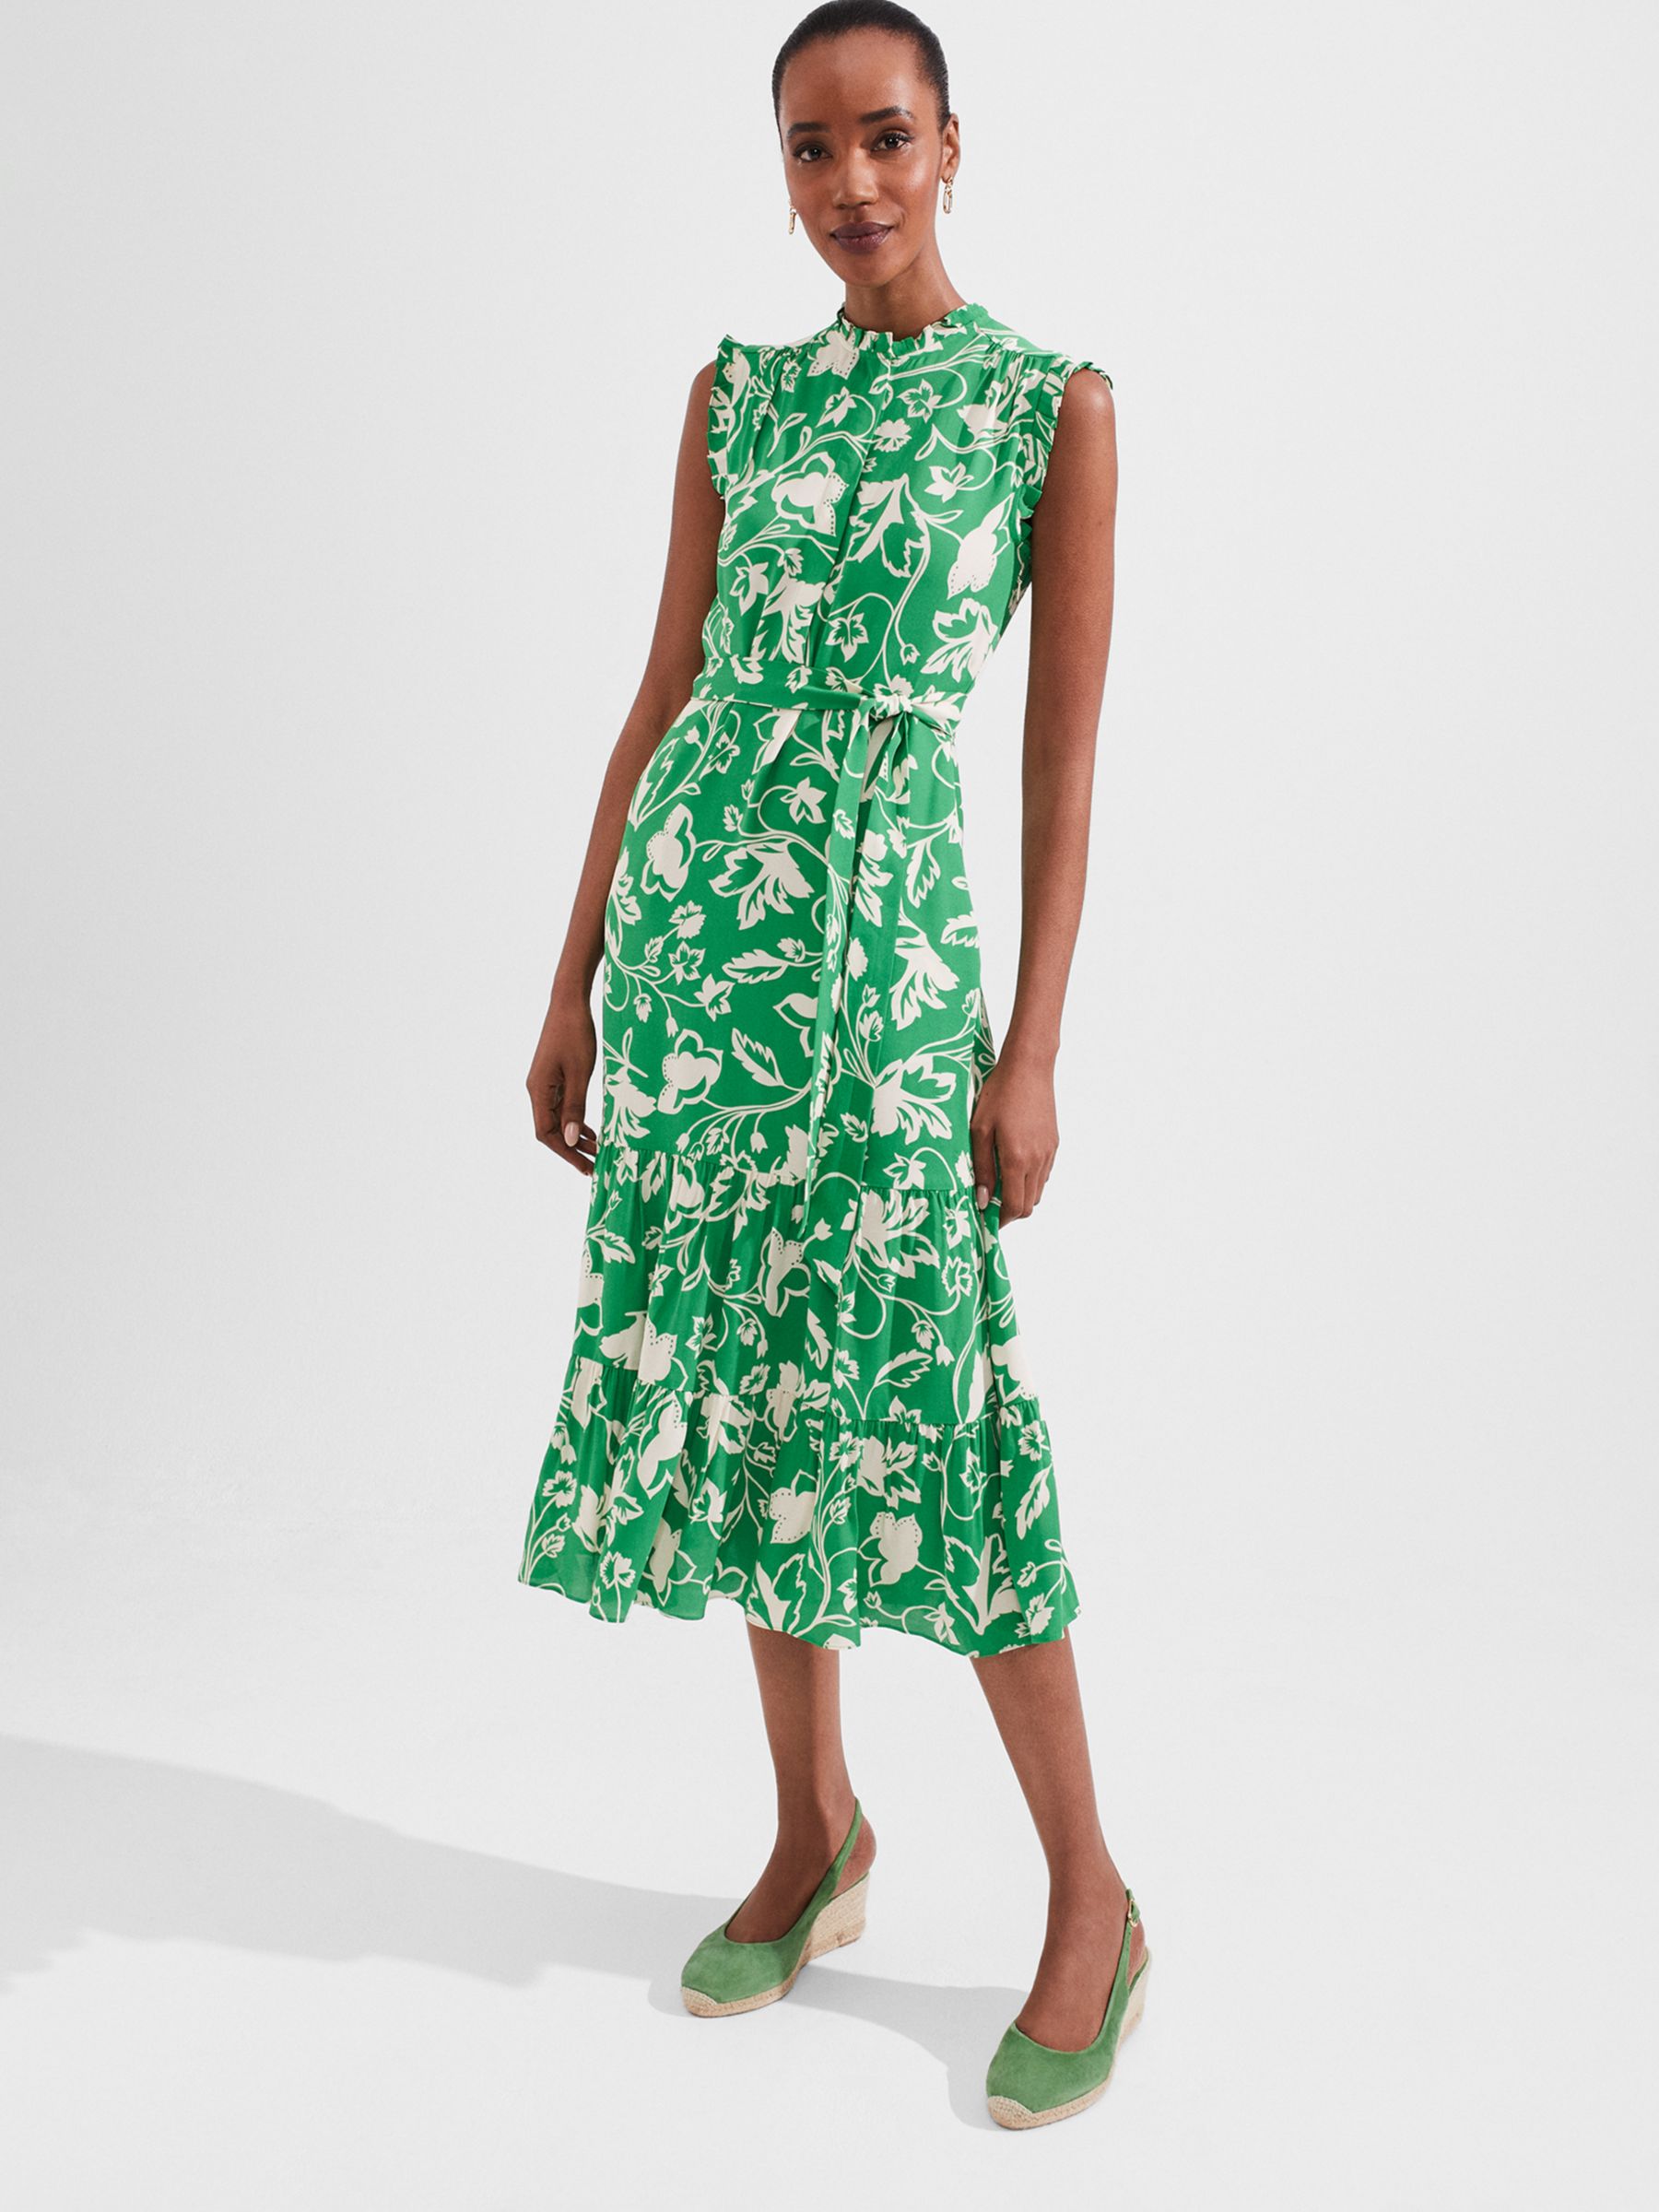 Hobbs Elsa Floral Frill Neck Midi Dress, Green/Ivory, 6